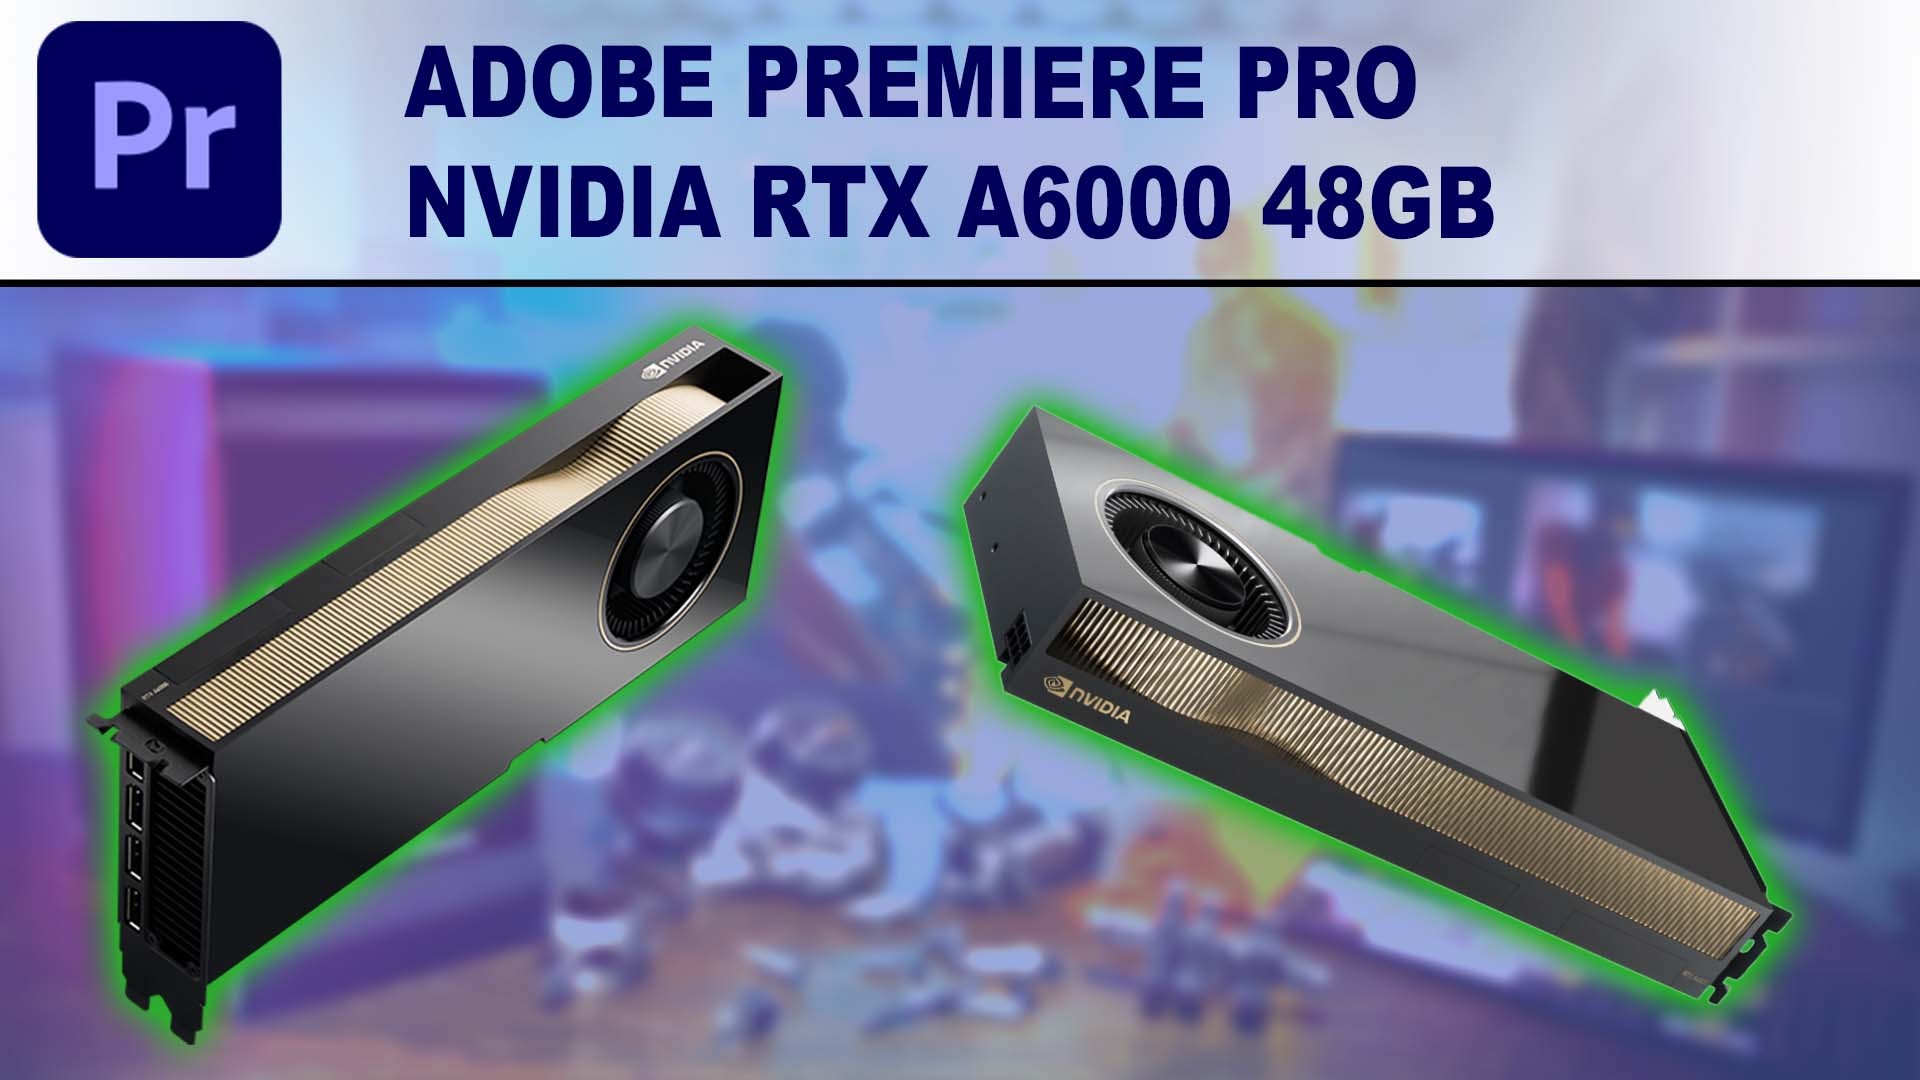 Premiere Pro GPU Performance Benchmark - NVIDIA RTX A6000 48GB